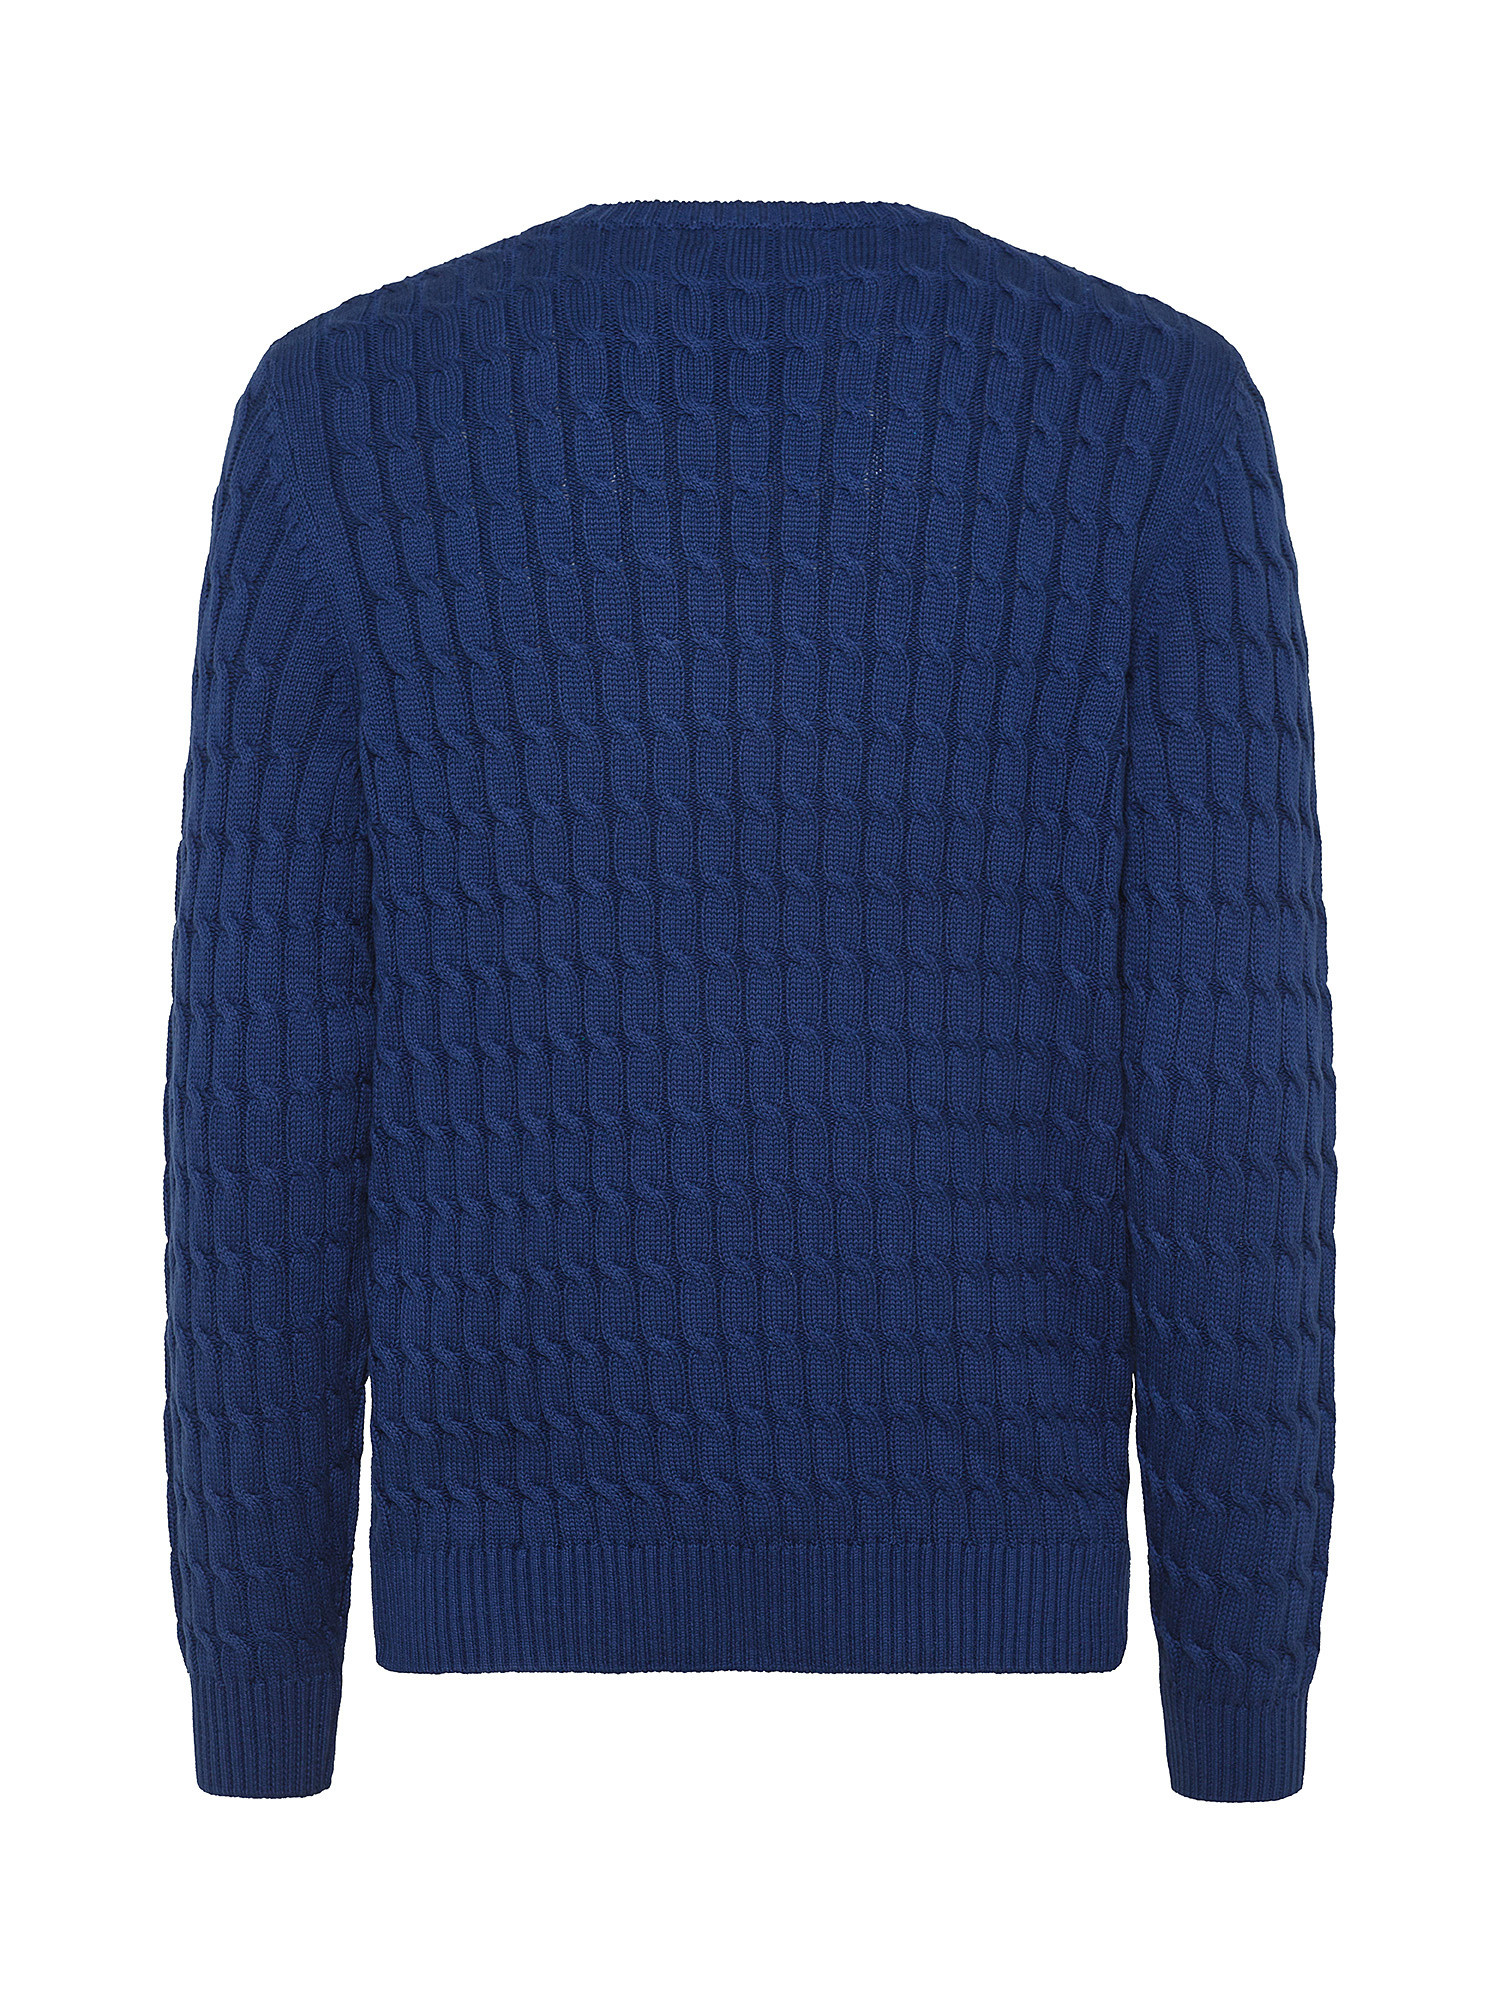 Luca D'Altieri - Crewneck sweater with pure cotton braids, Blue, large image number 1